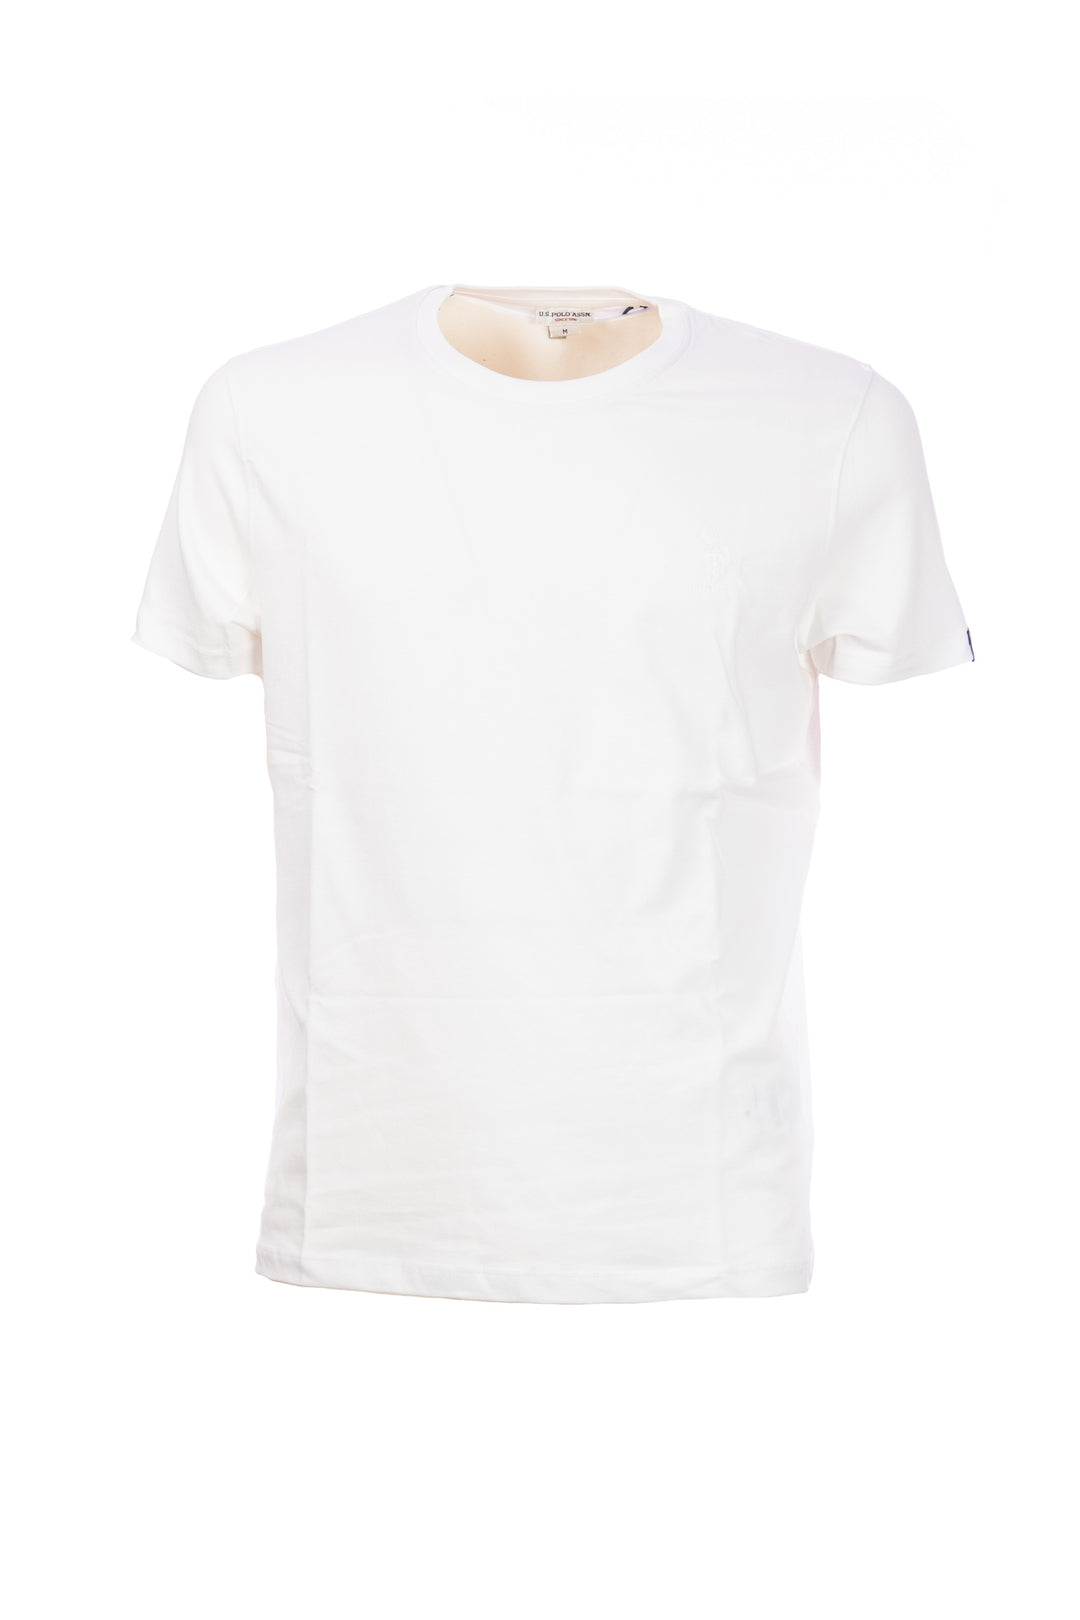 U.S. POLO ASSN. T-shirt bianca tinta unita in cotone stretch con logo ricamato - Mancinelli 1954